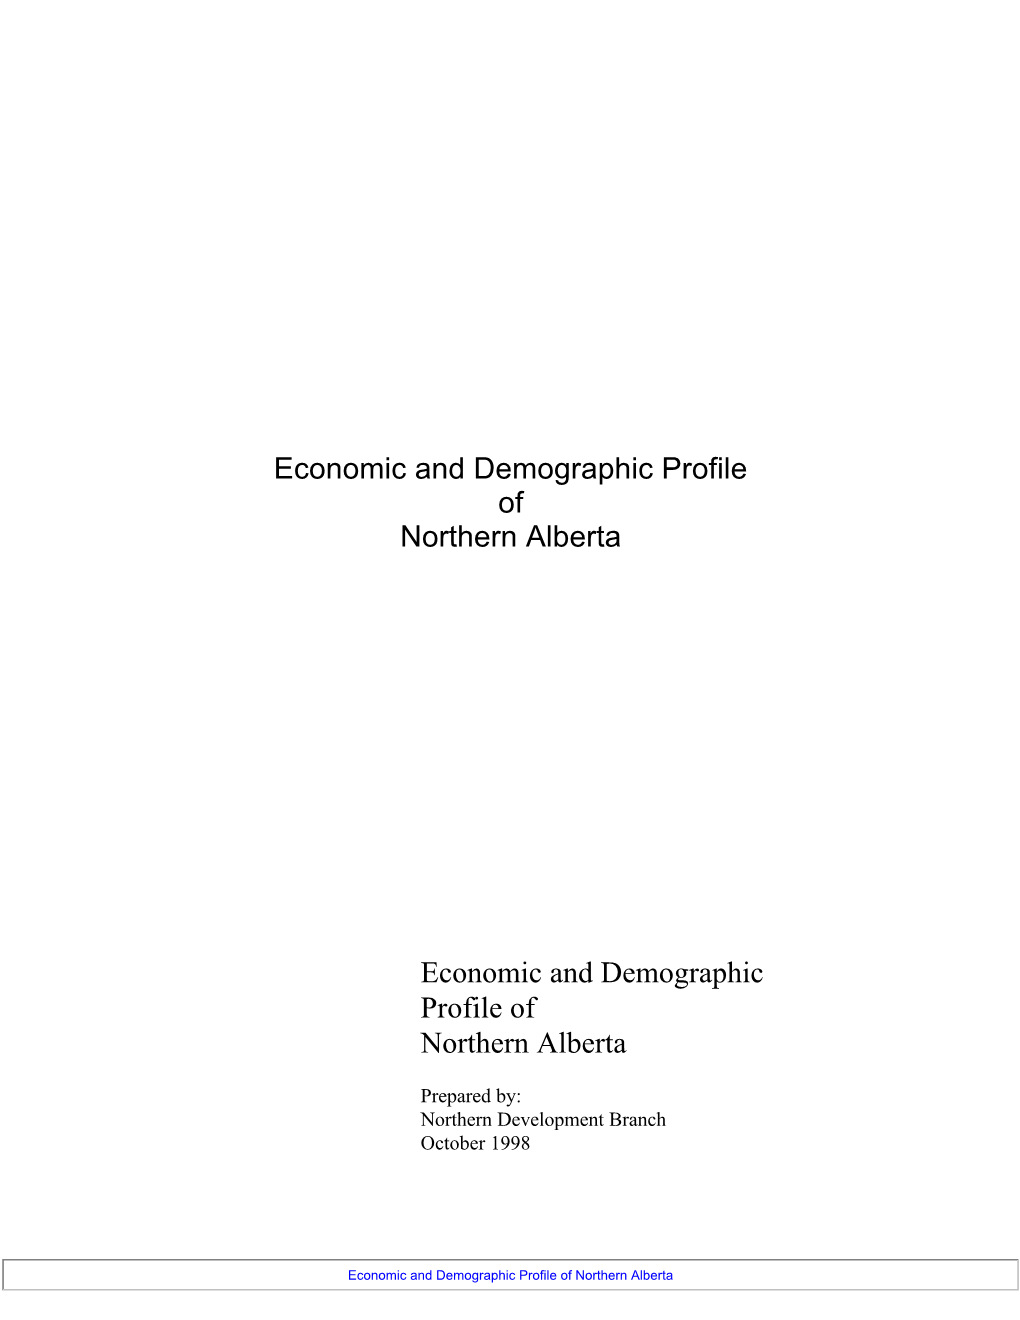 98' NADC Economic and Demographic Profile